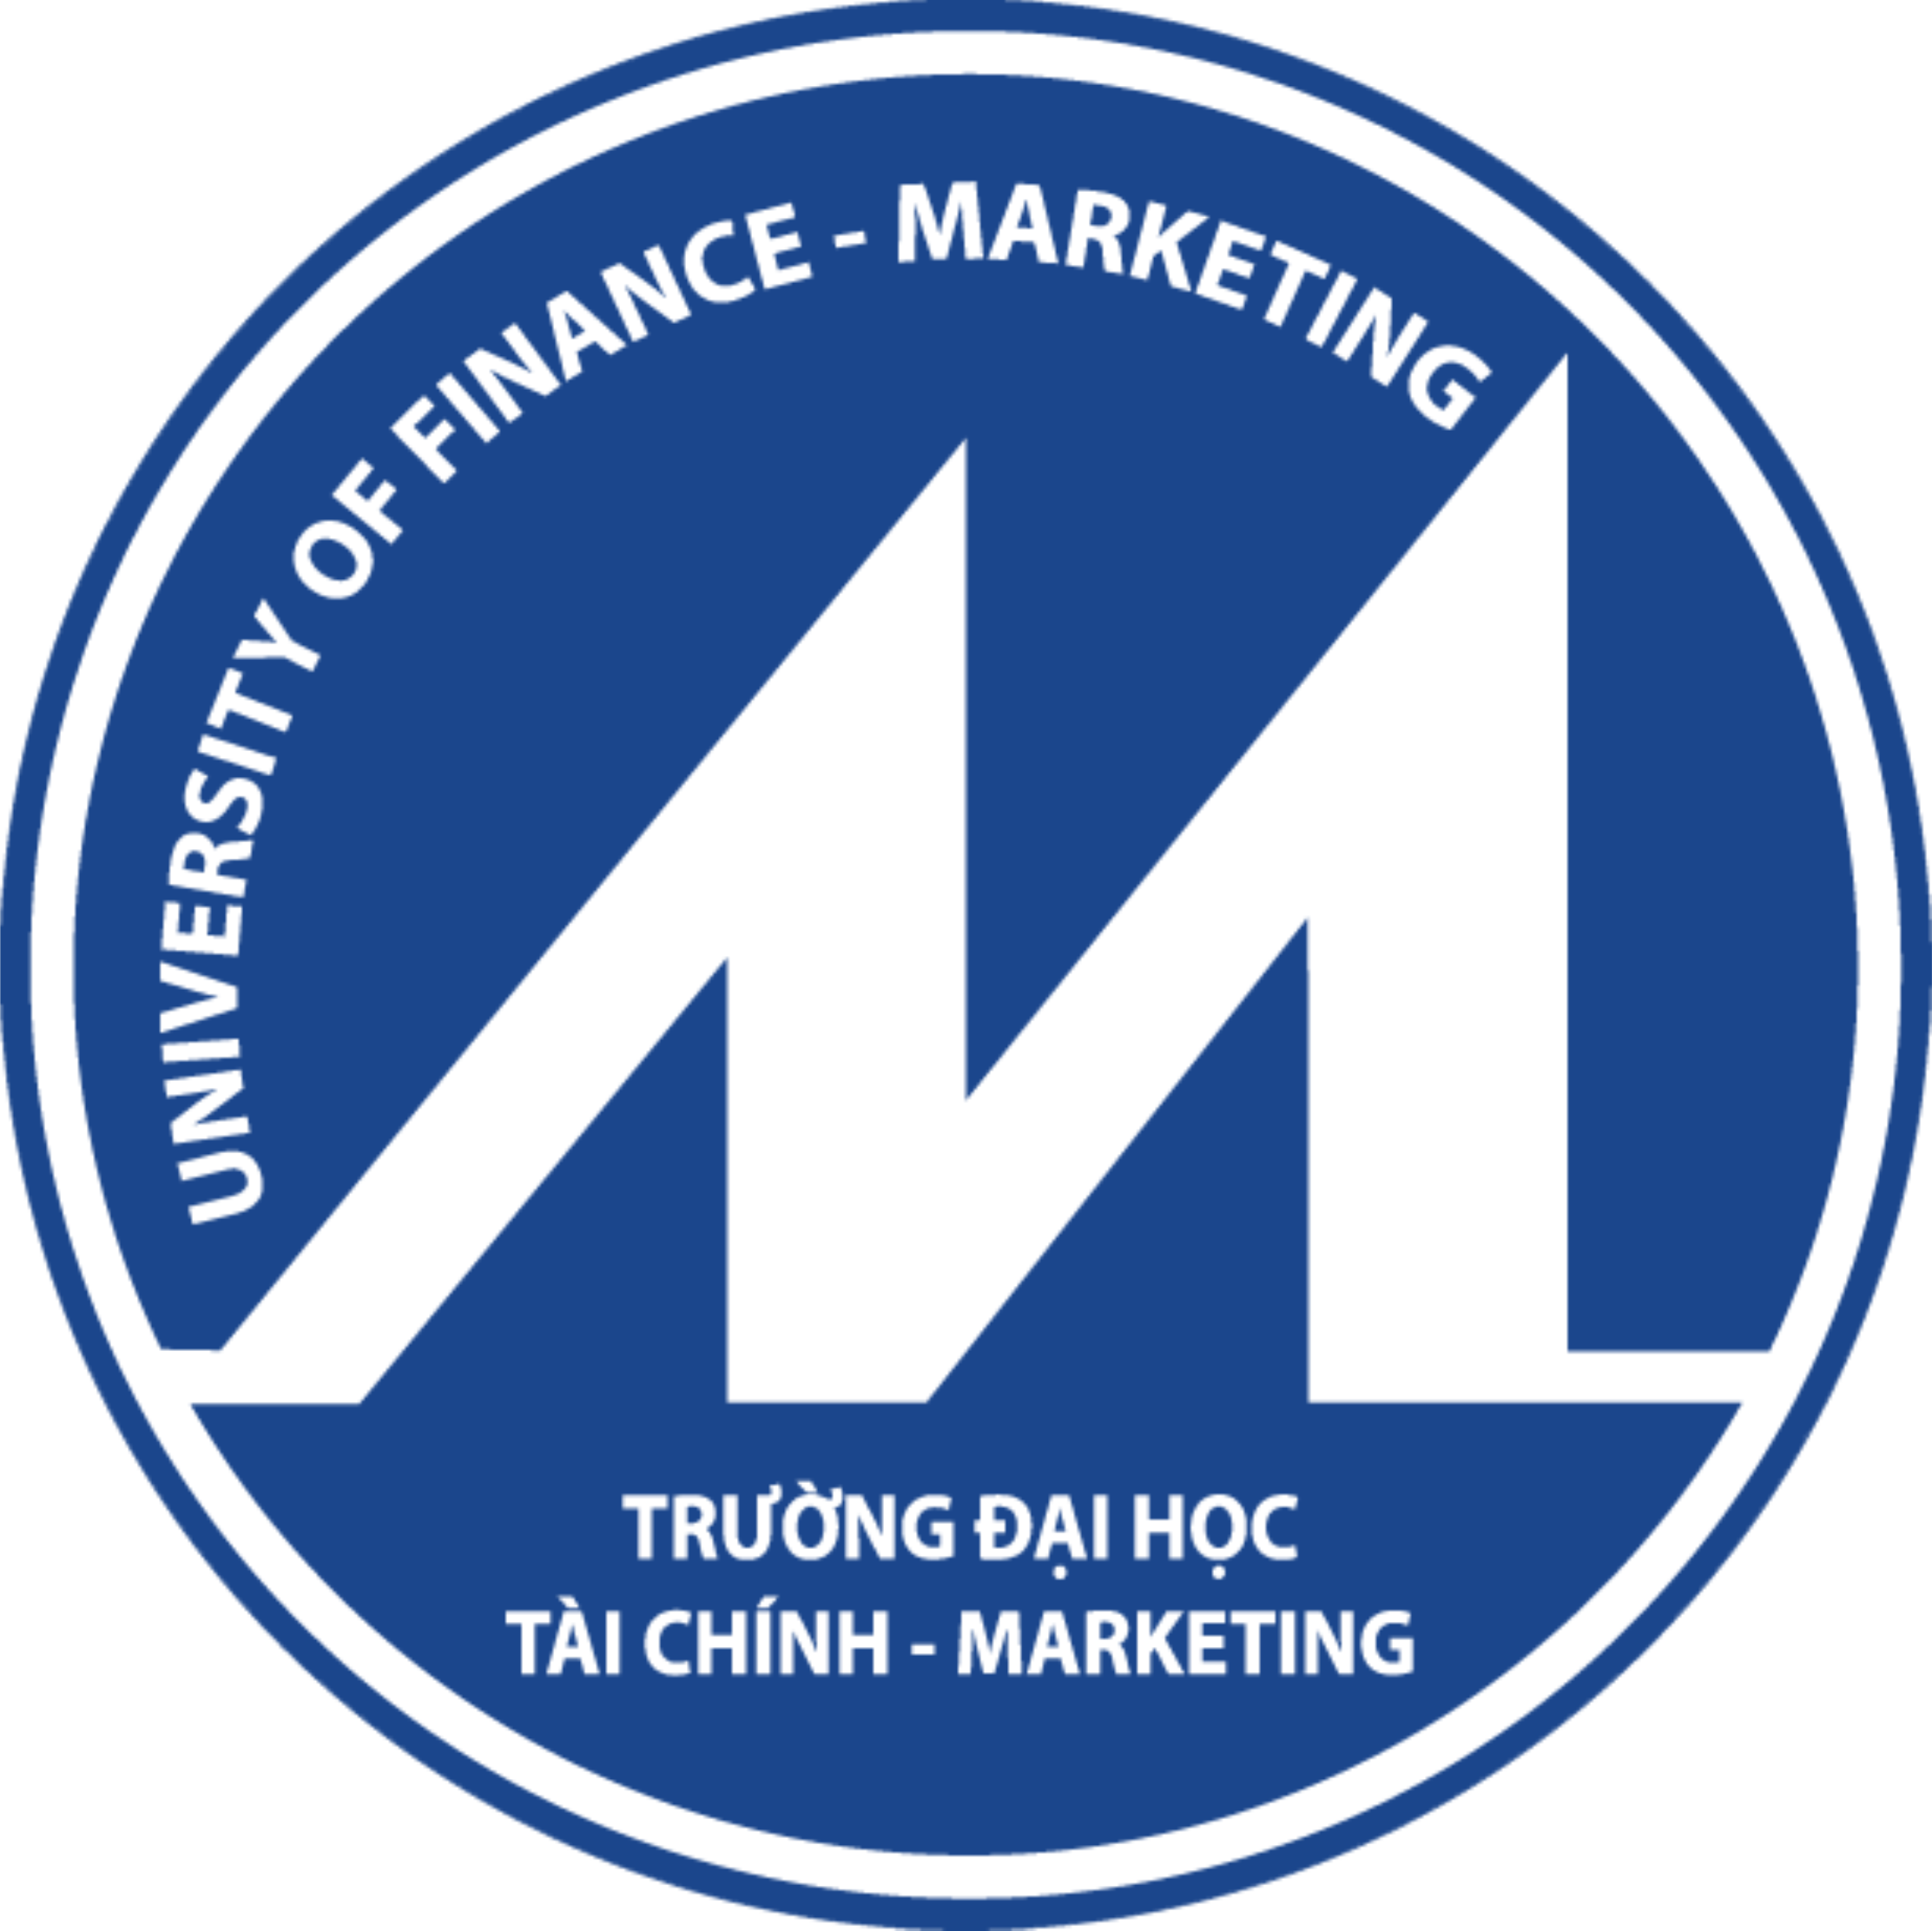 University of Finance - Marketing